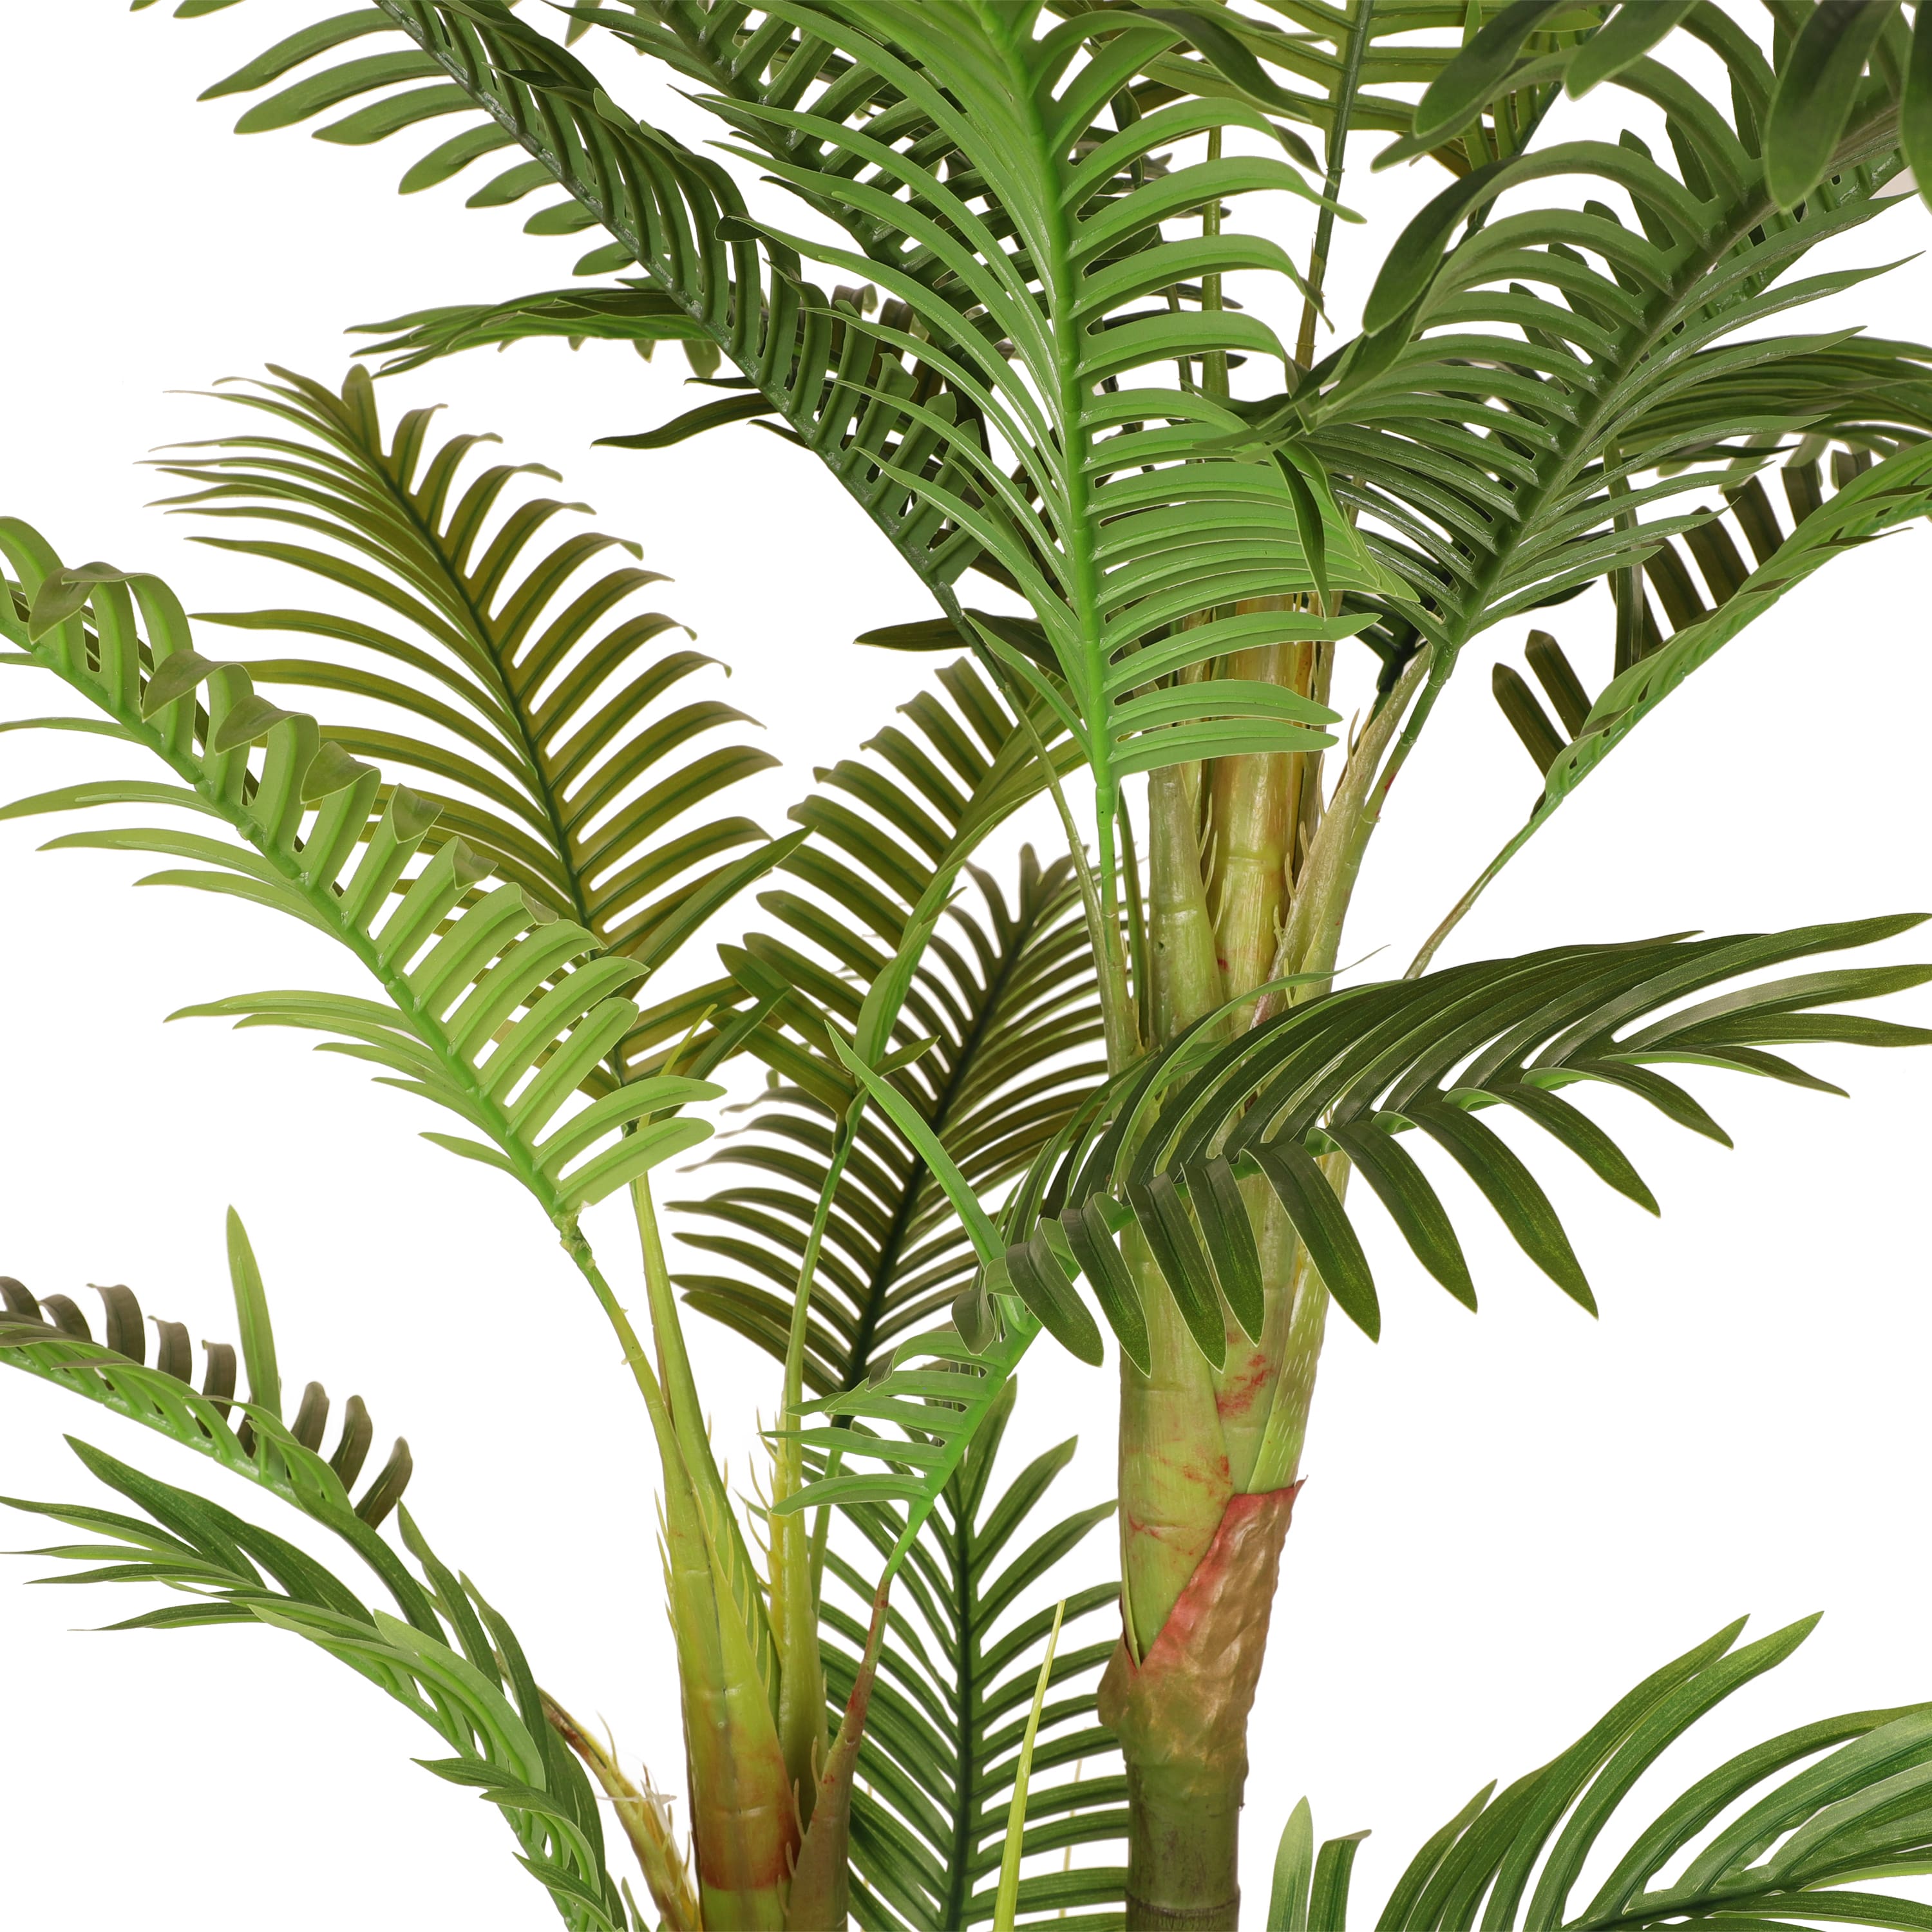 6ft. Artificial Areca Palm Tree in White Decorative Pot